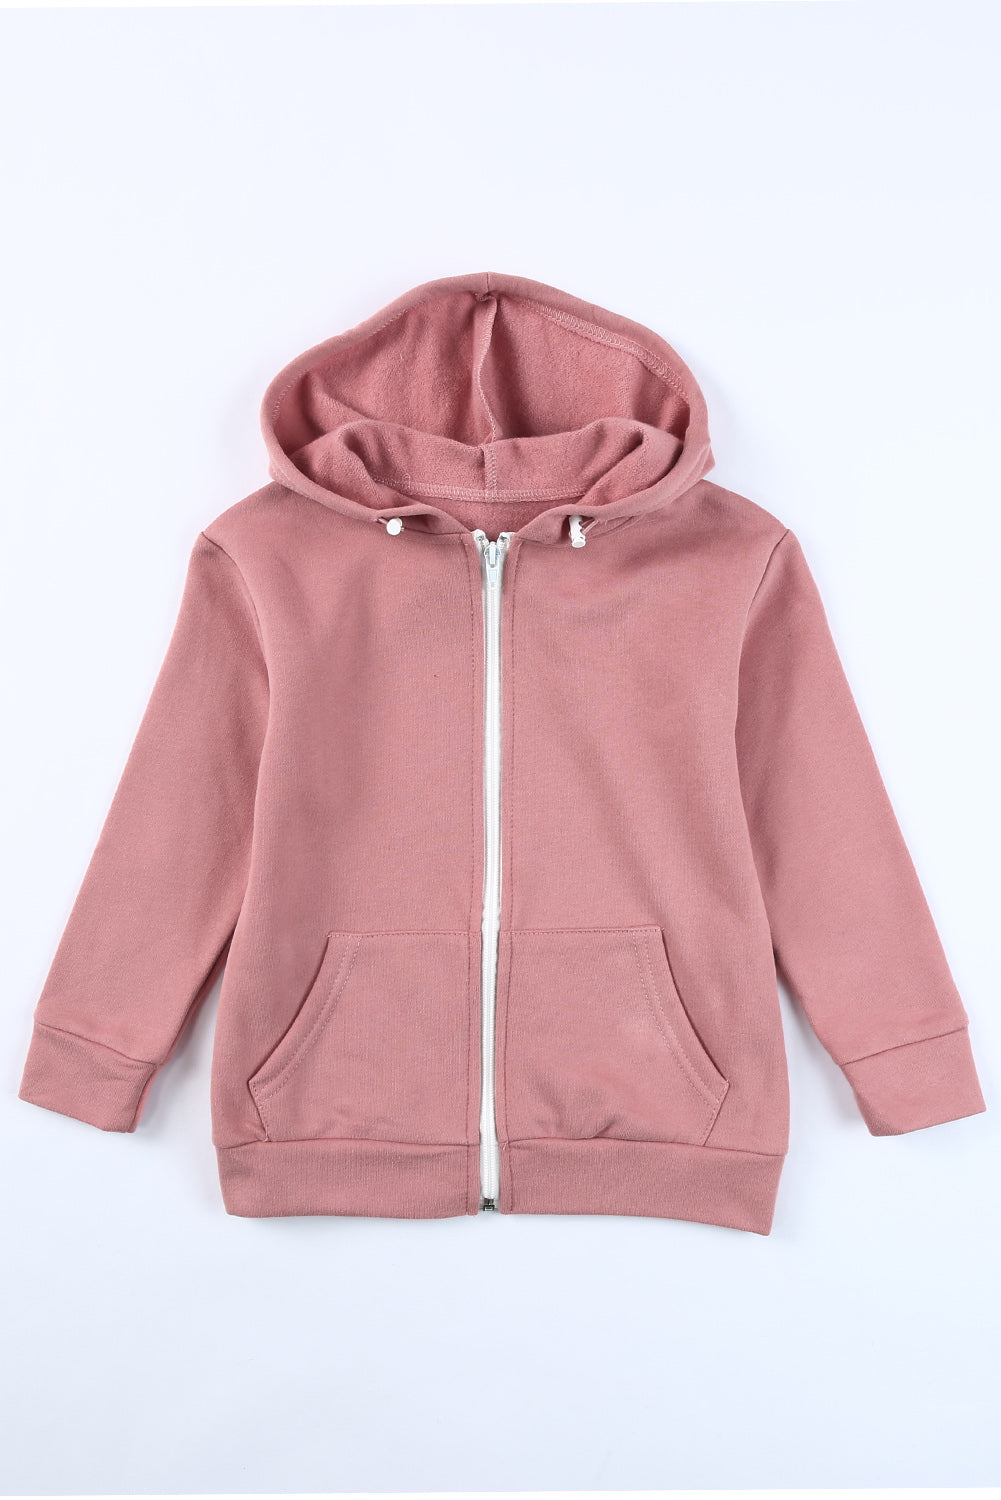 Girls Zip-Up Drawstring Hooded Jacket with Pockets - DromedarShop.com Online Boutique